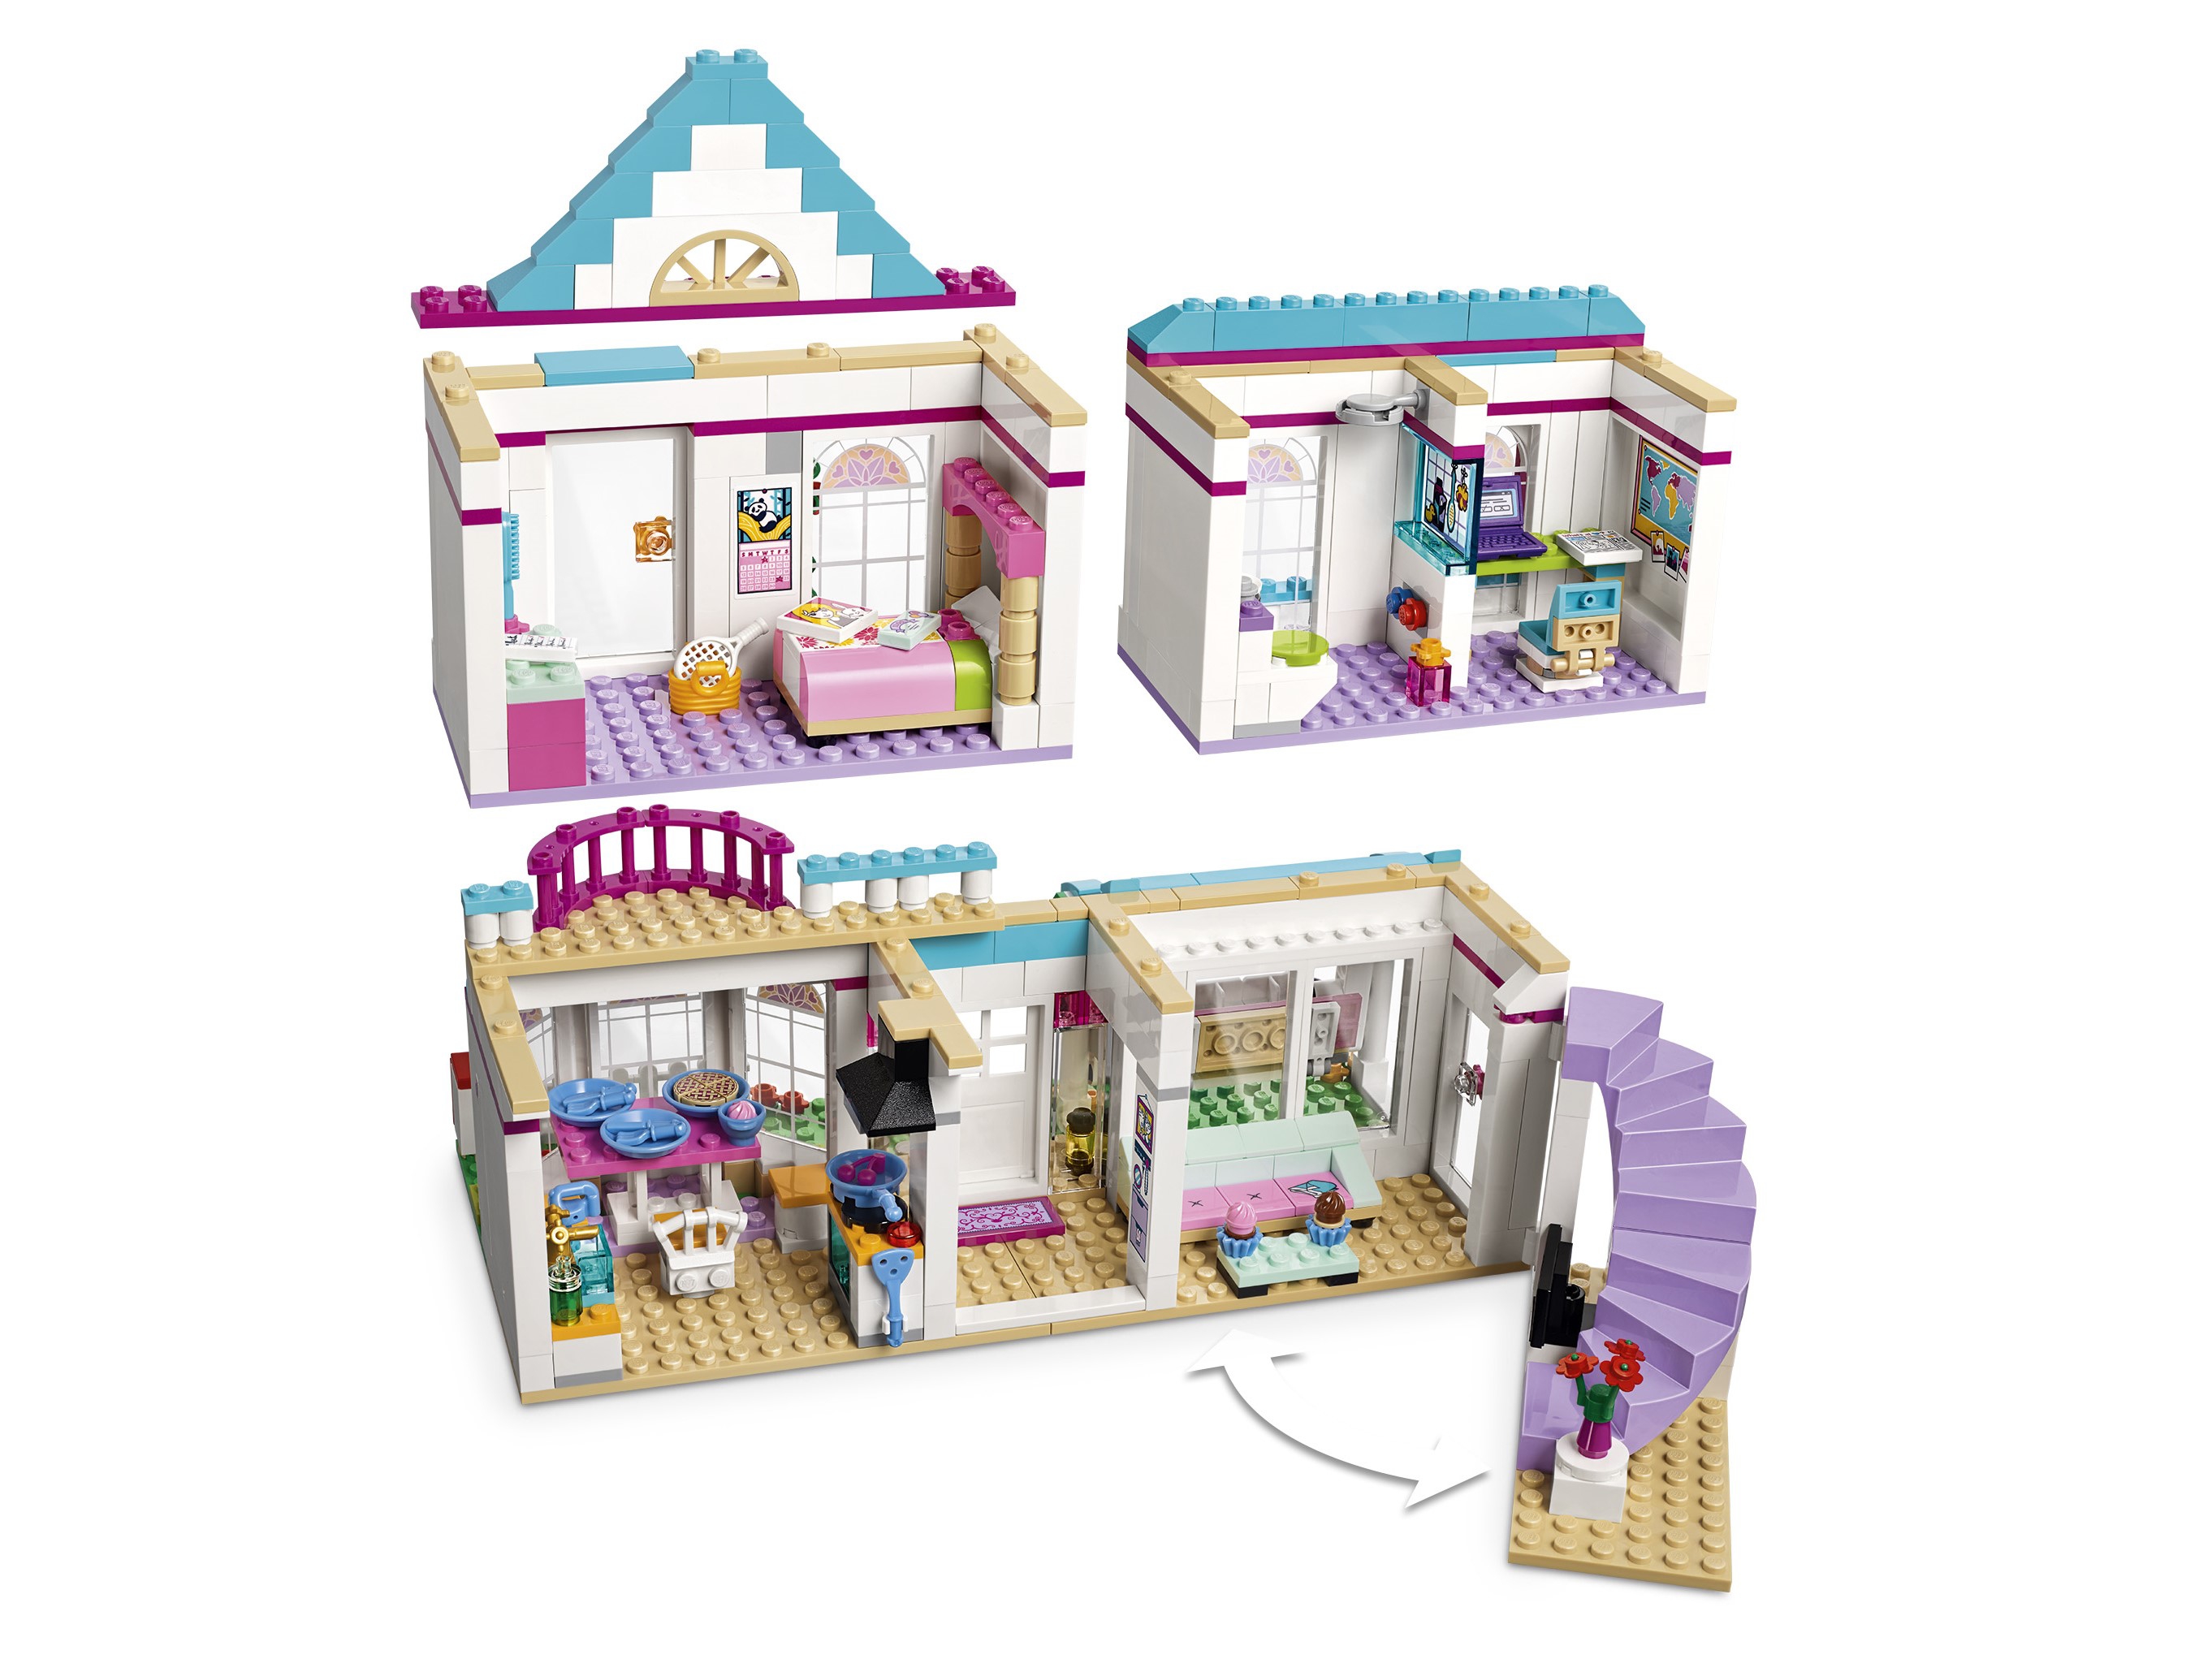 tommelfinger repræsentant Resultat Stephanie's House 41314 | Friends | Buy online at the Official LEGO® Shop US